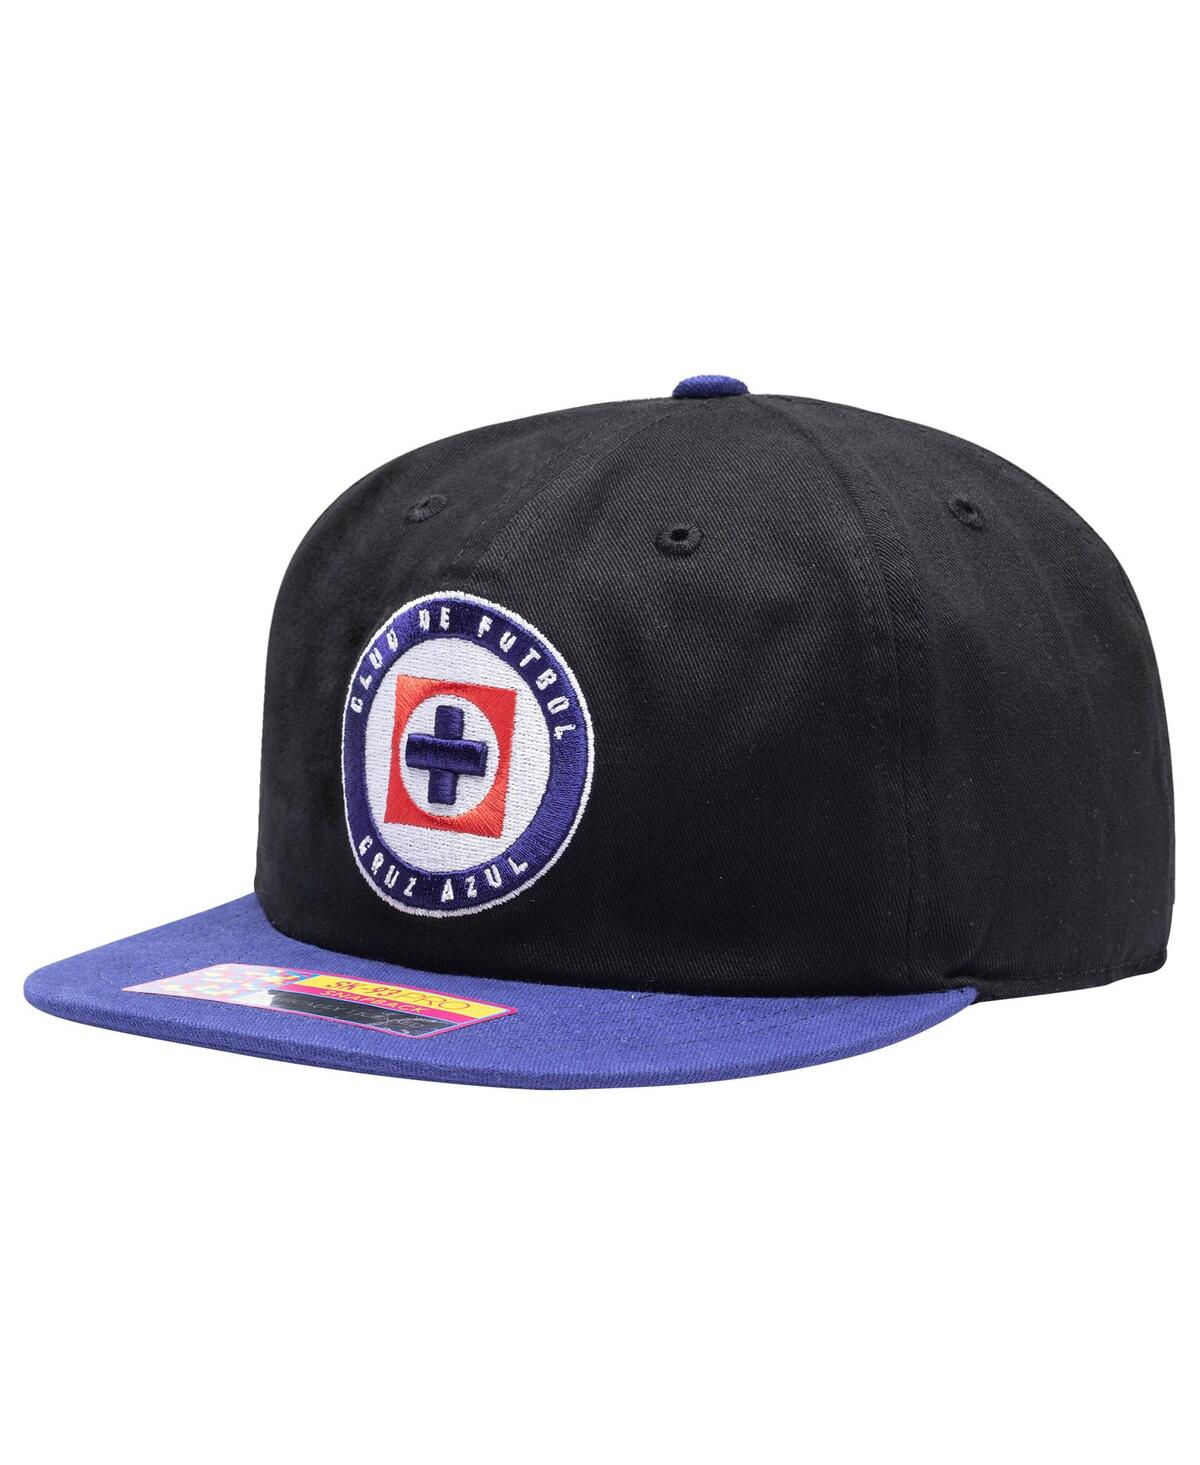 Men's Black Cruz Azul Swingman Snapback Hat - Black